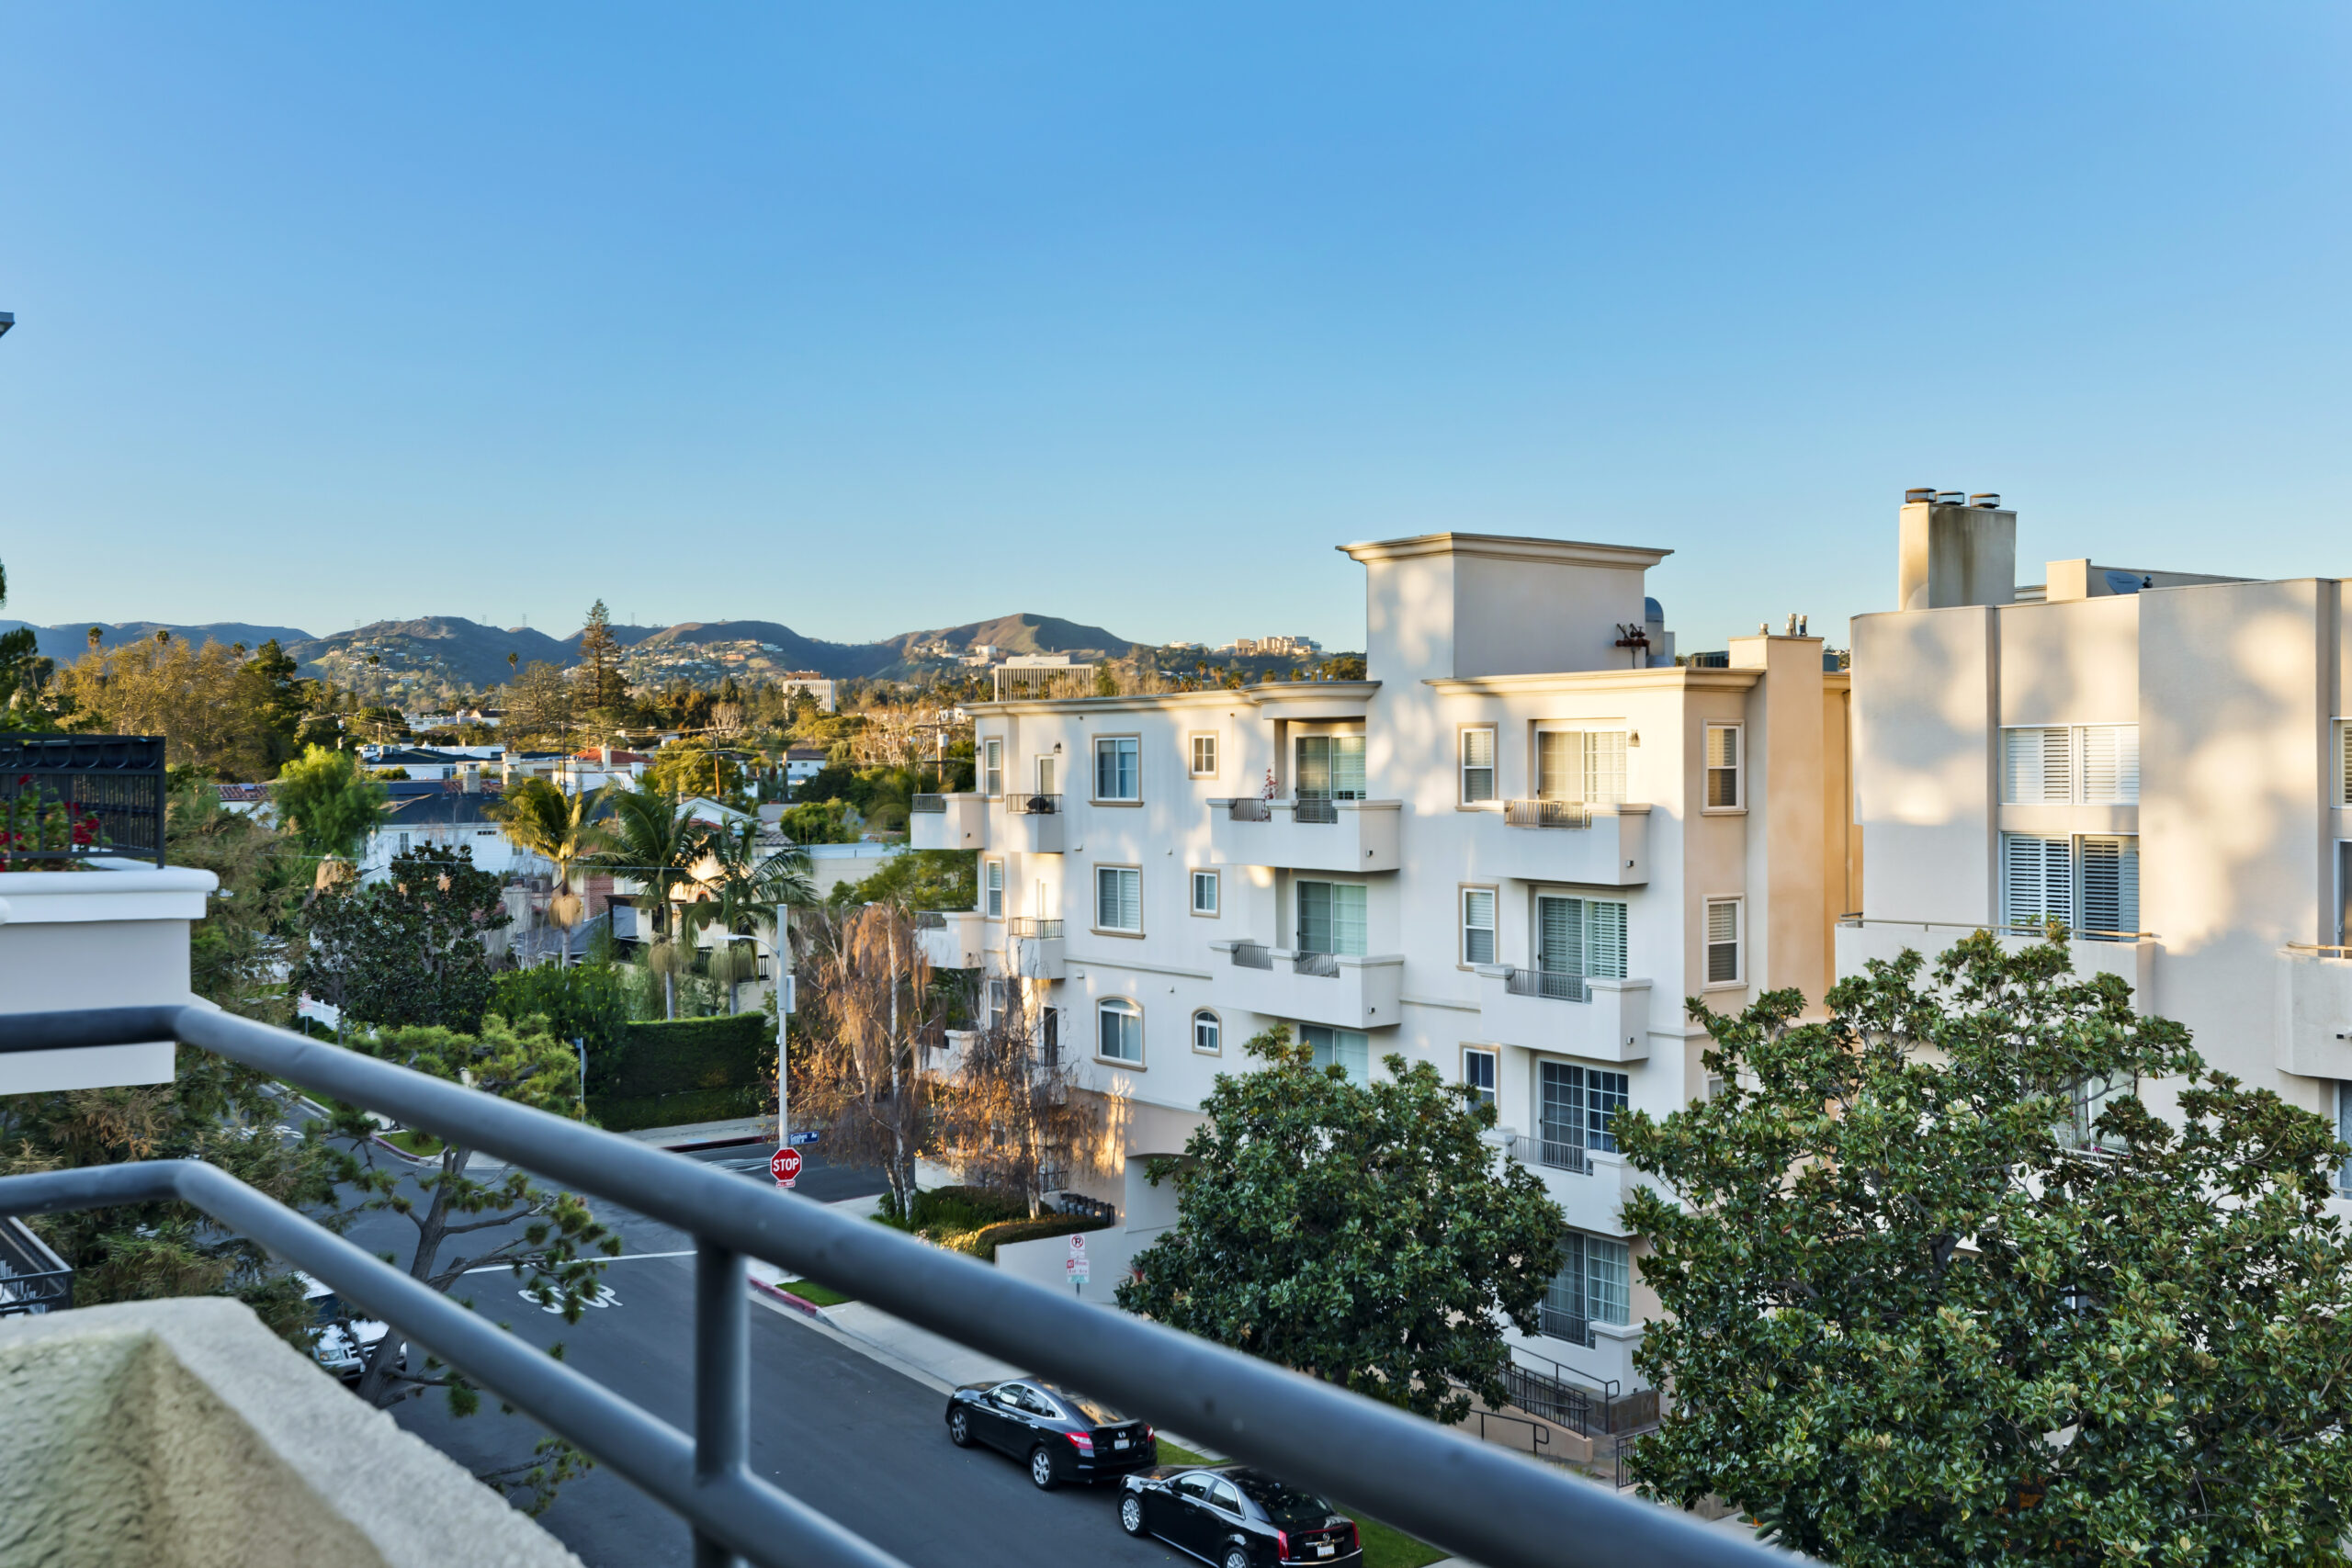 1169 Wellesley, Los Angeles balcony view